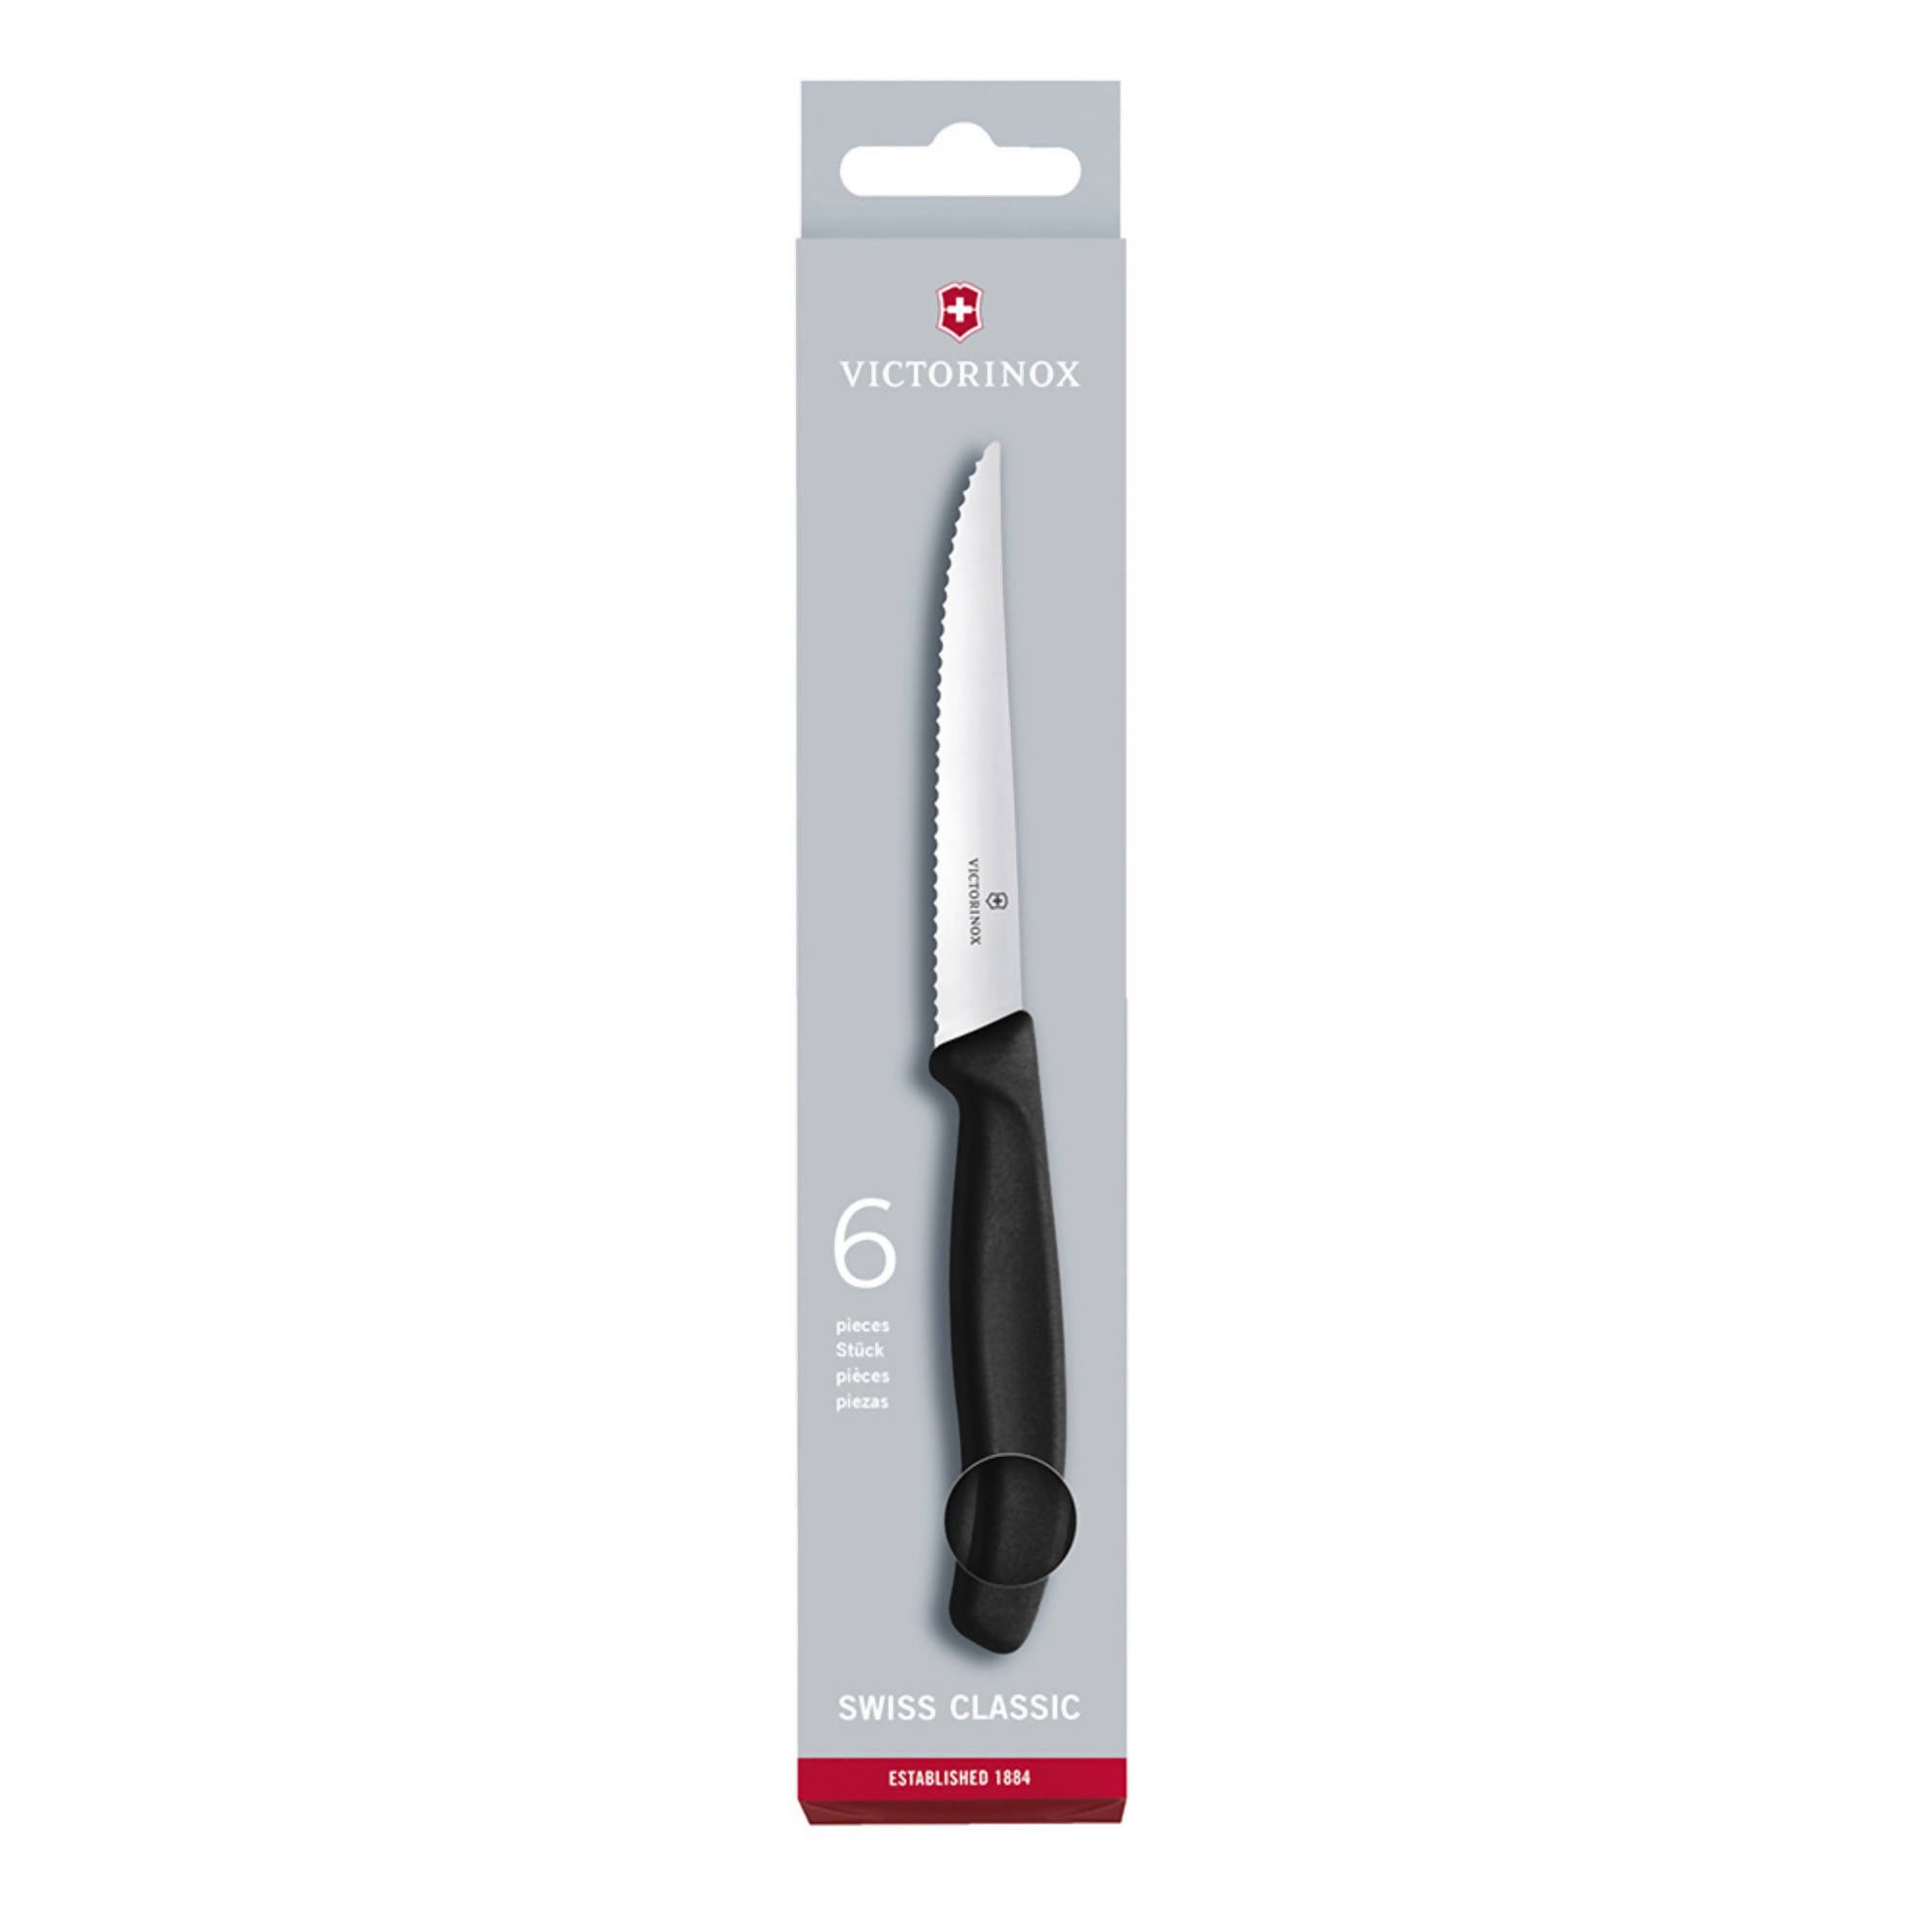  Victorinox Swiss Classic - Juego de cuchillos de